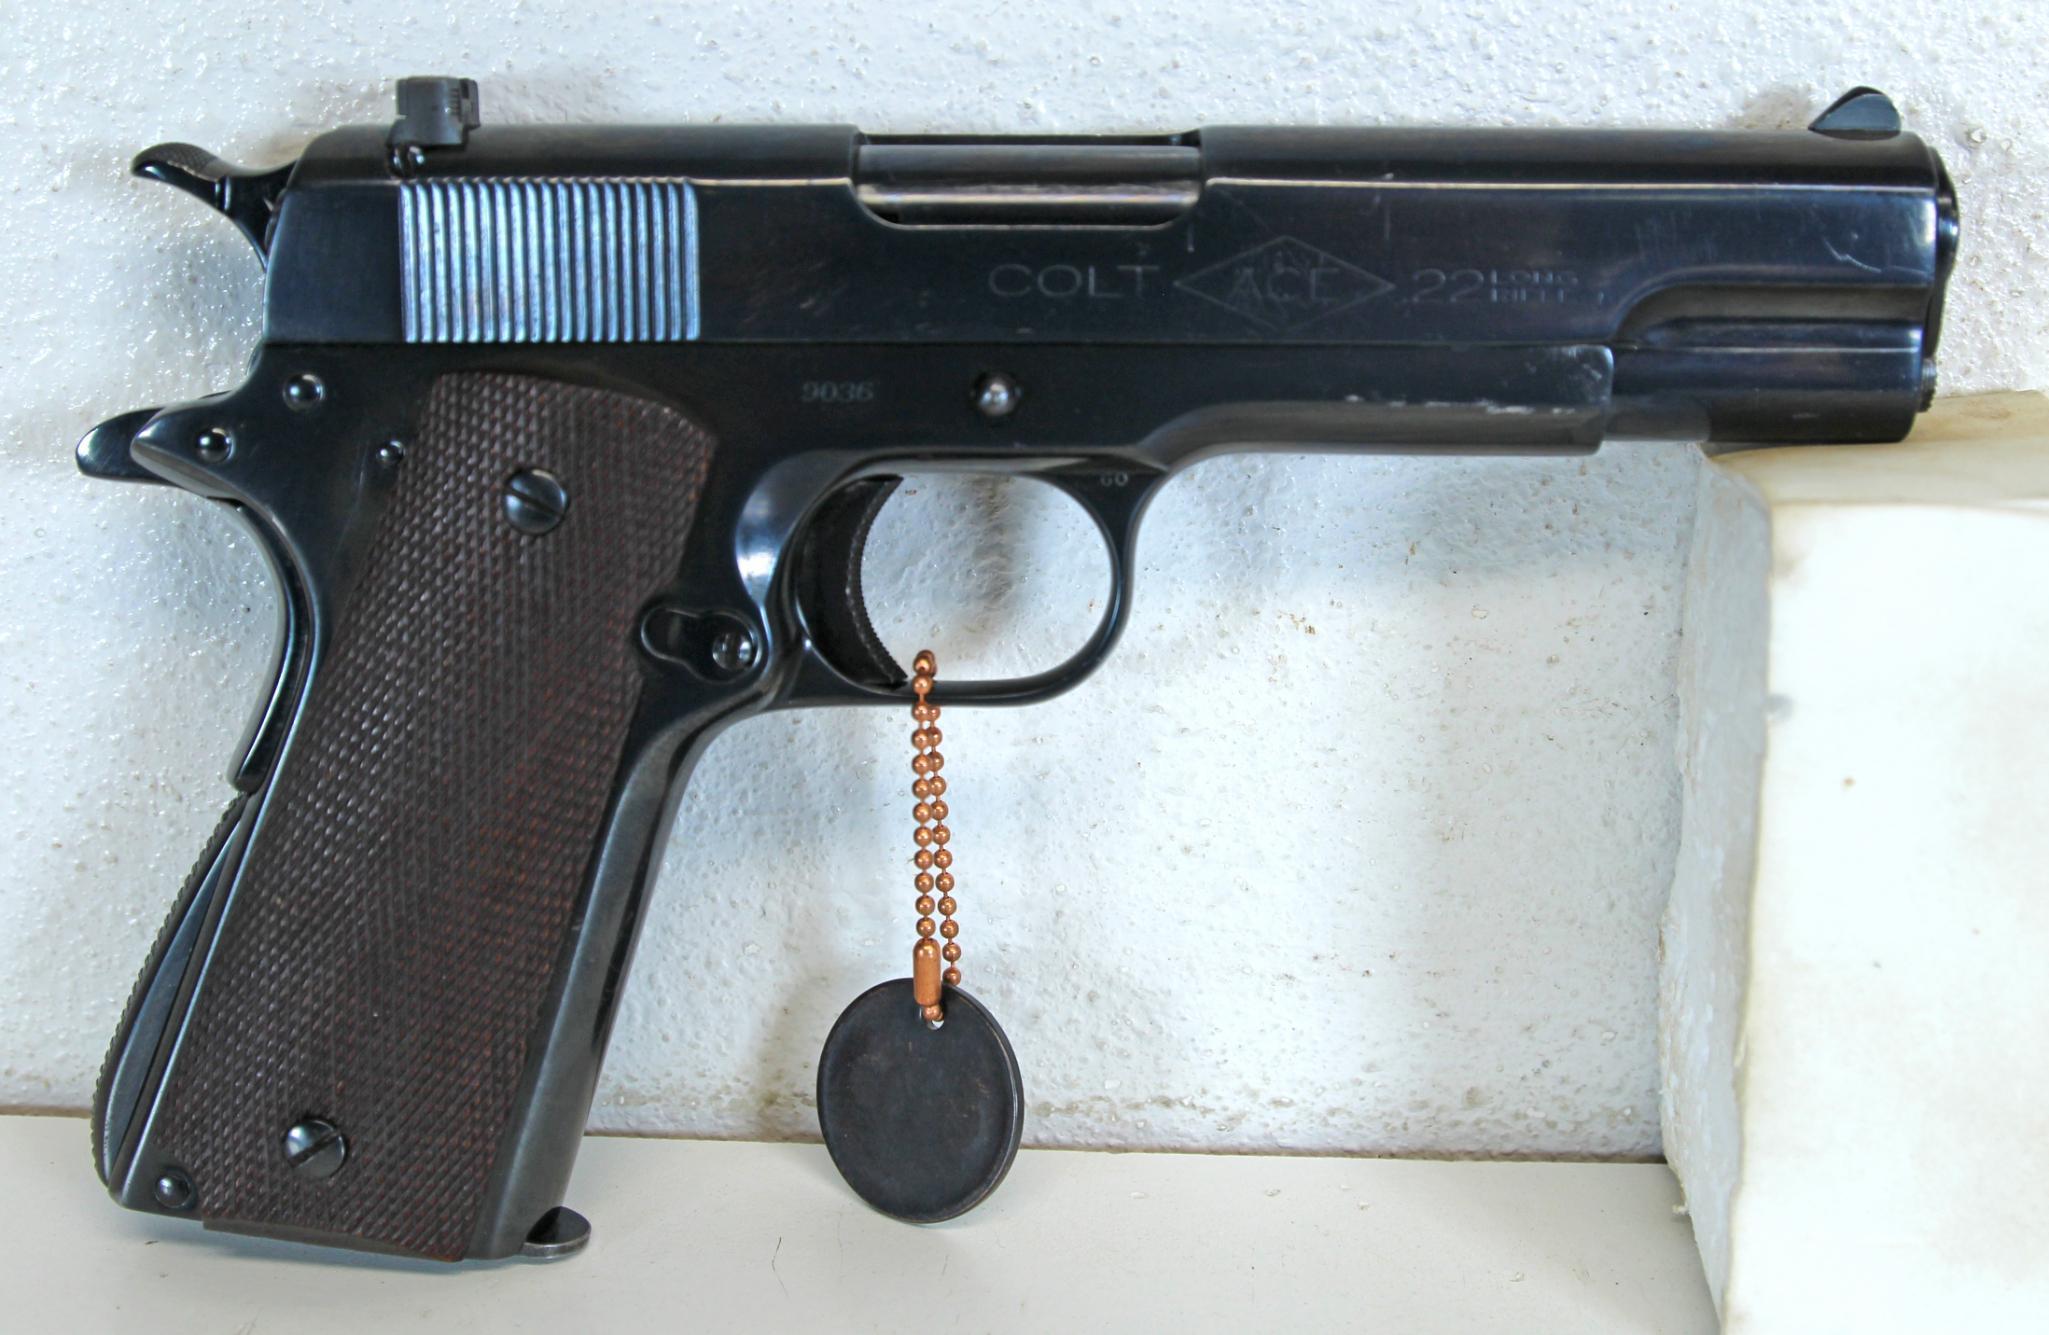 Pre-War 1938 Colt 1911A1 Ace Model .22 LR Semi-Auto Pistol Mfg. 1938 - Only about 11,000 were